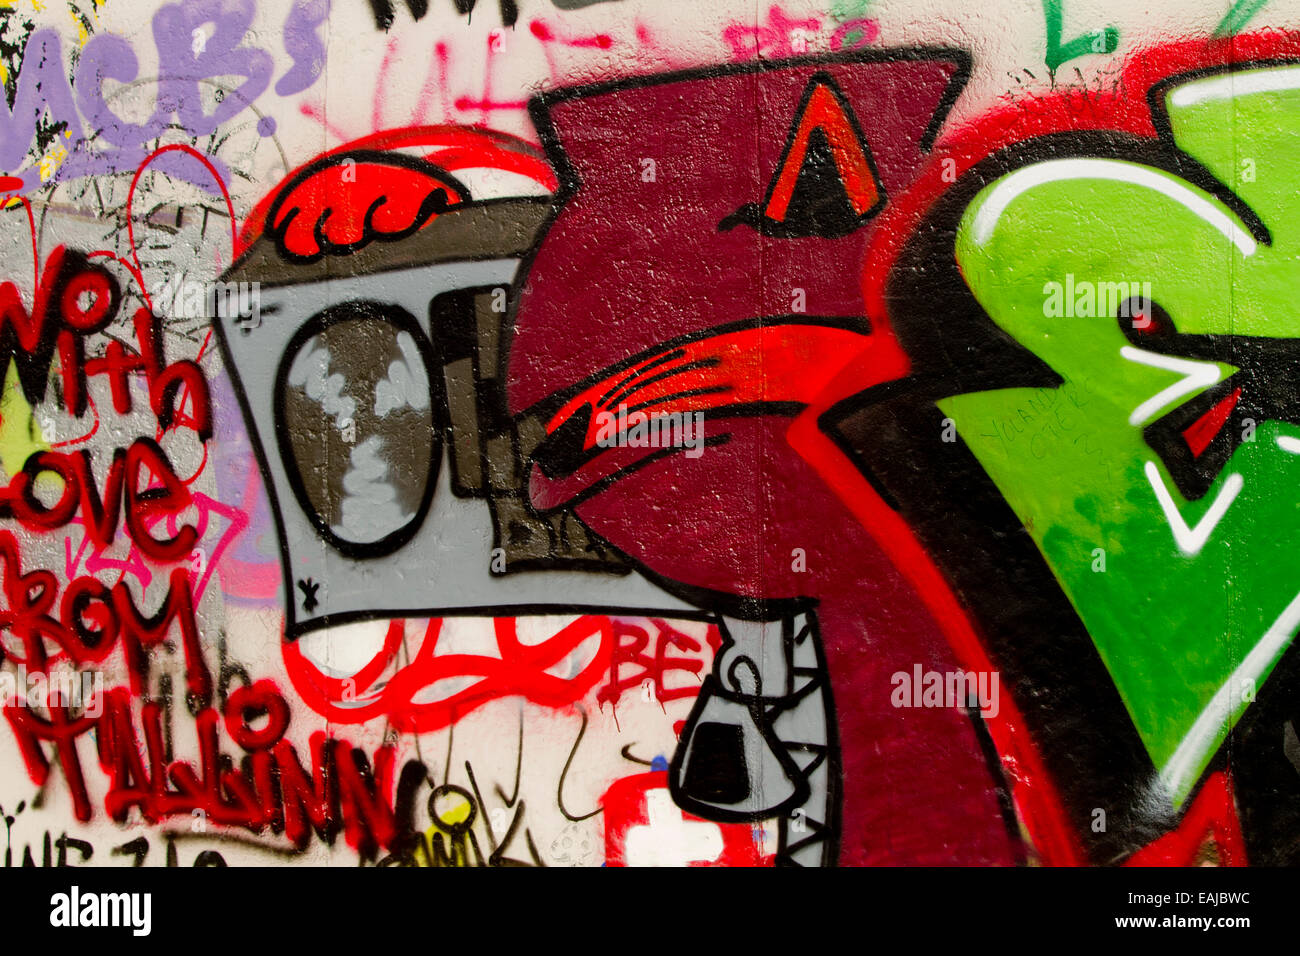 Graffiti cartoon ghetto blaster colour Berlin art Stock Photo